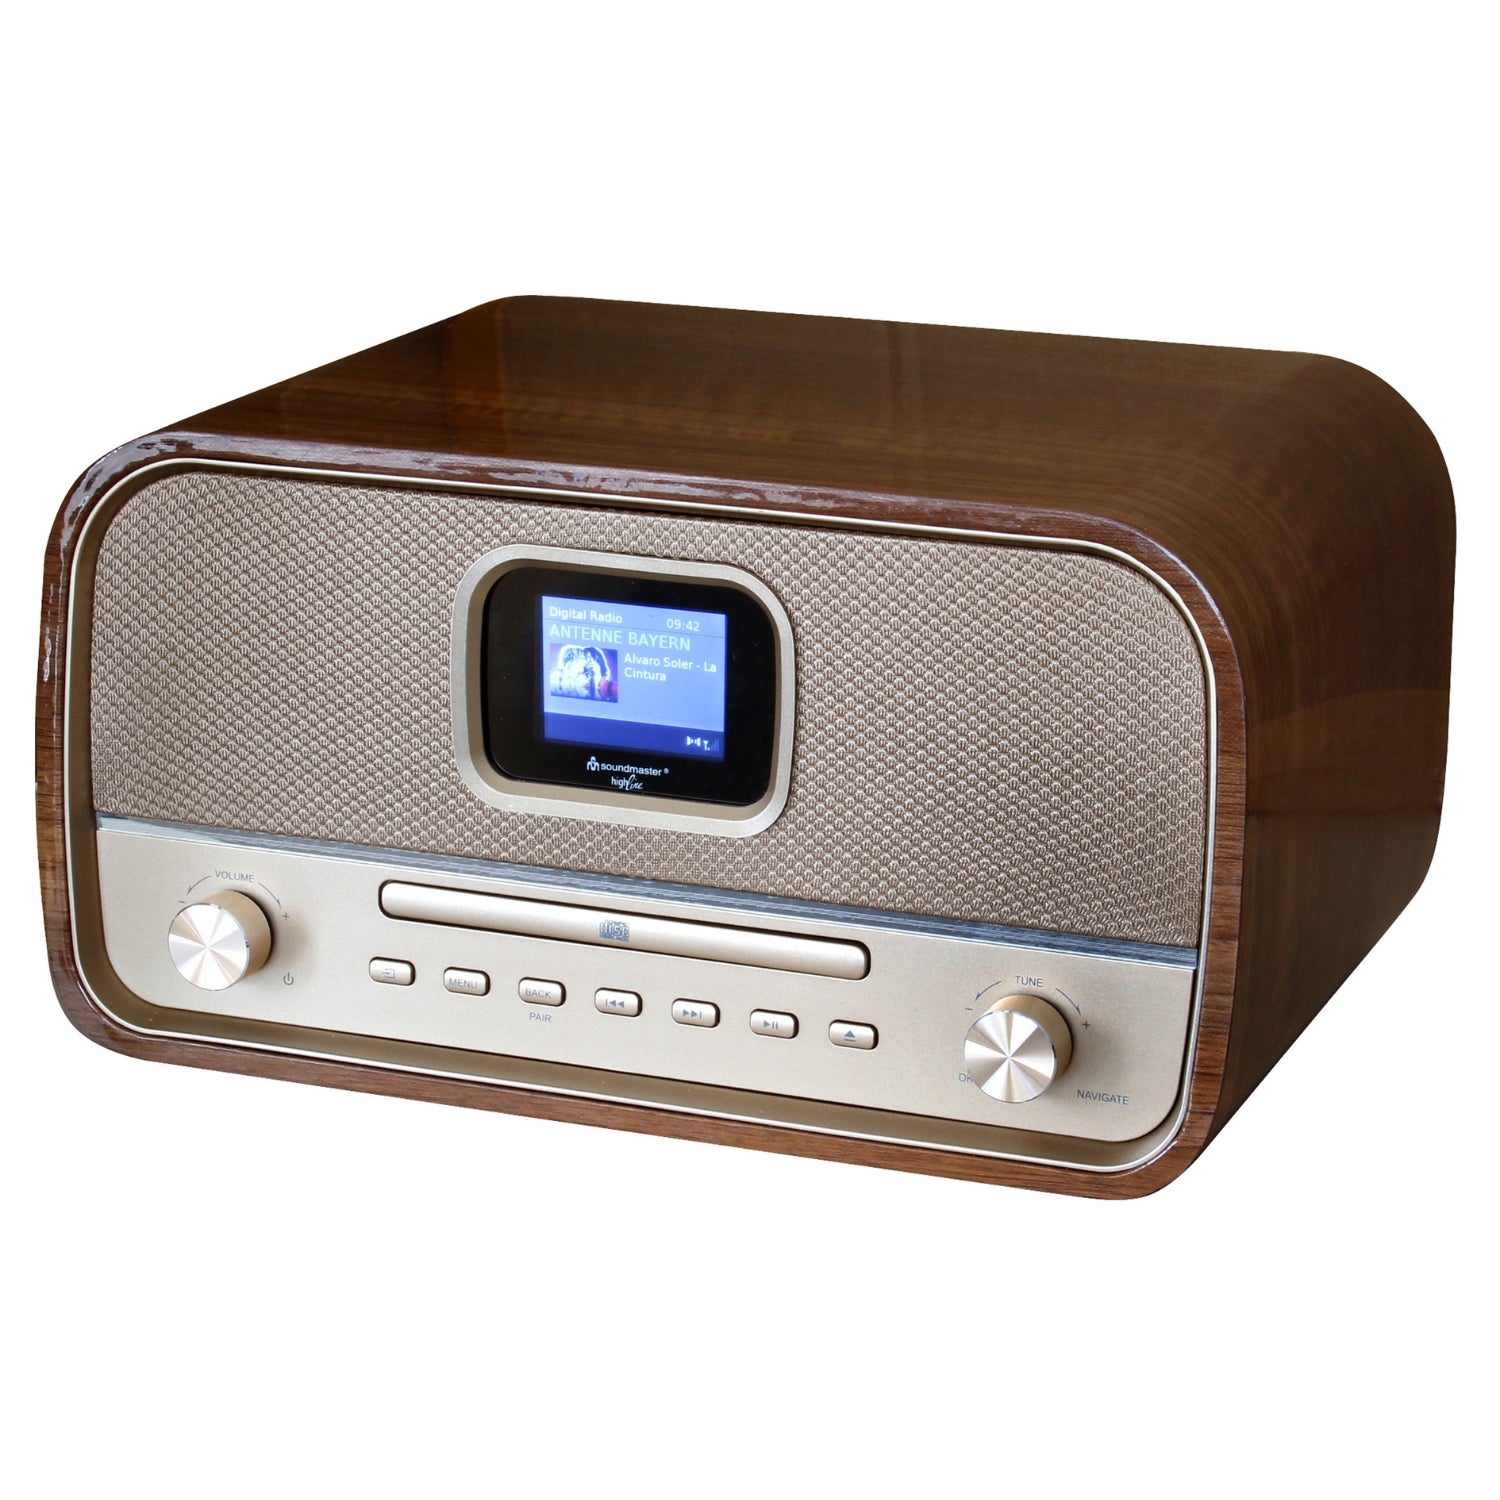 Soundmaster HighLine DAB970BR1 Retro Kompaktanlage Stereo HiFi-Anlage DAB+ UKW CD-Player MP3 USB Bluetooth Streaming Farbdisplay